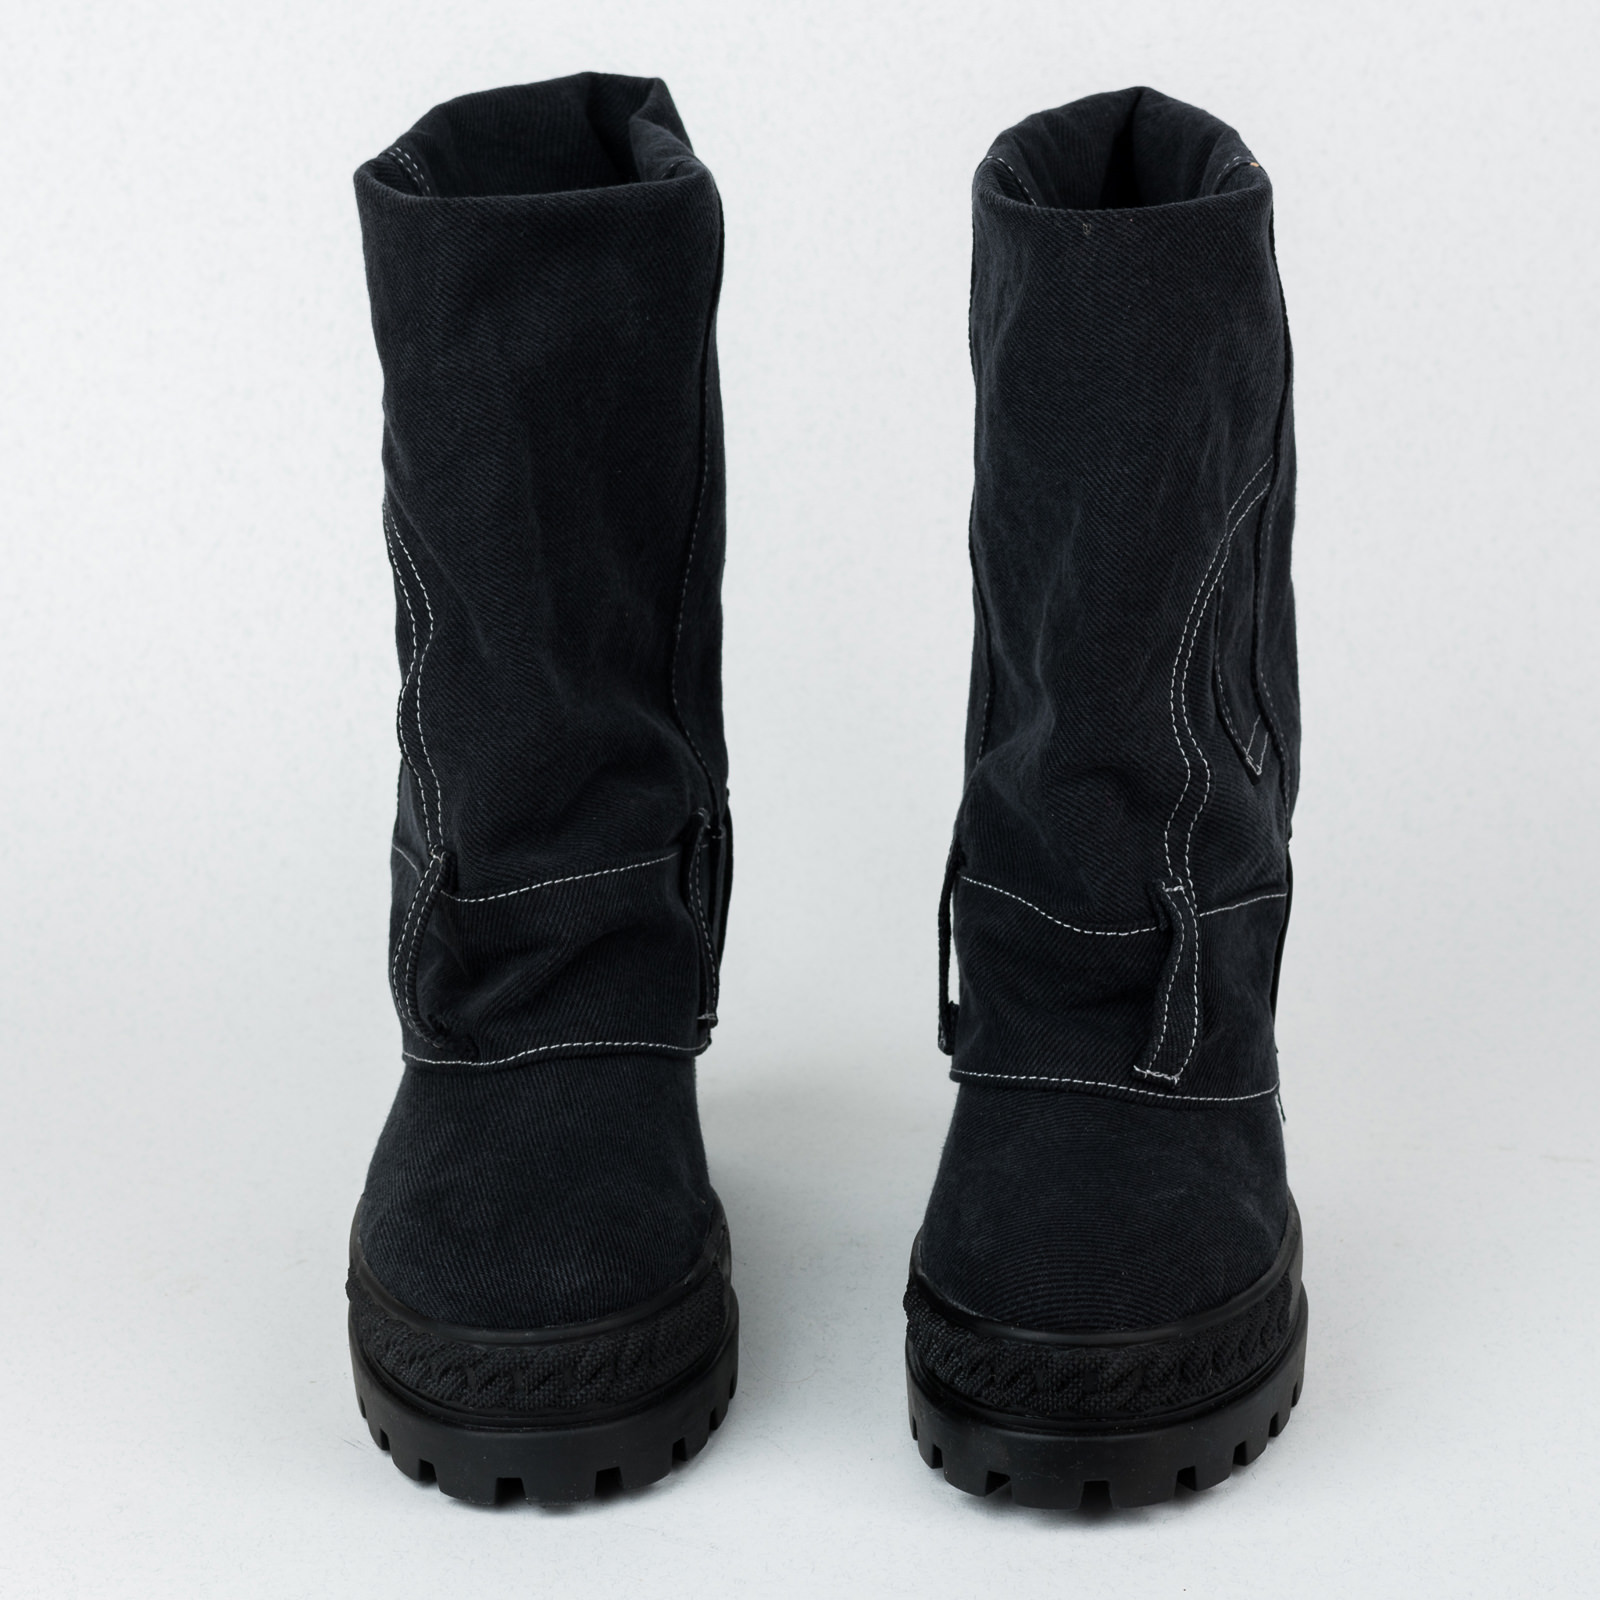 Women ankle boots B479 - BLACK